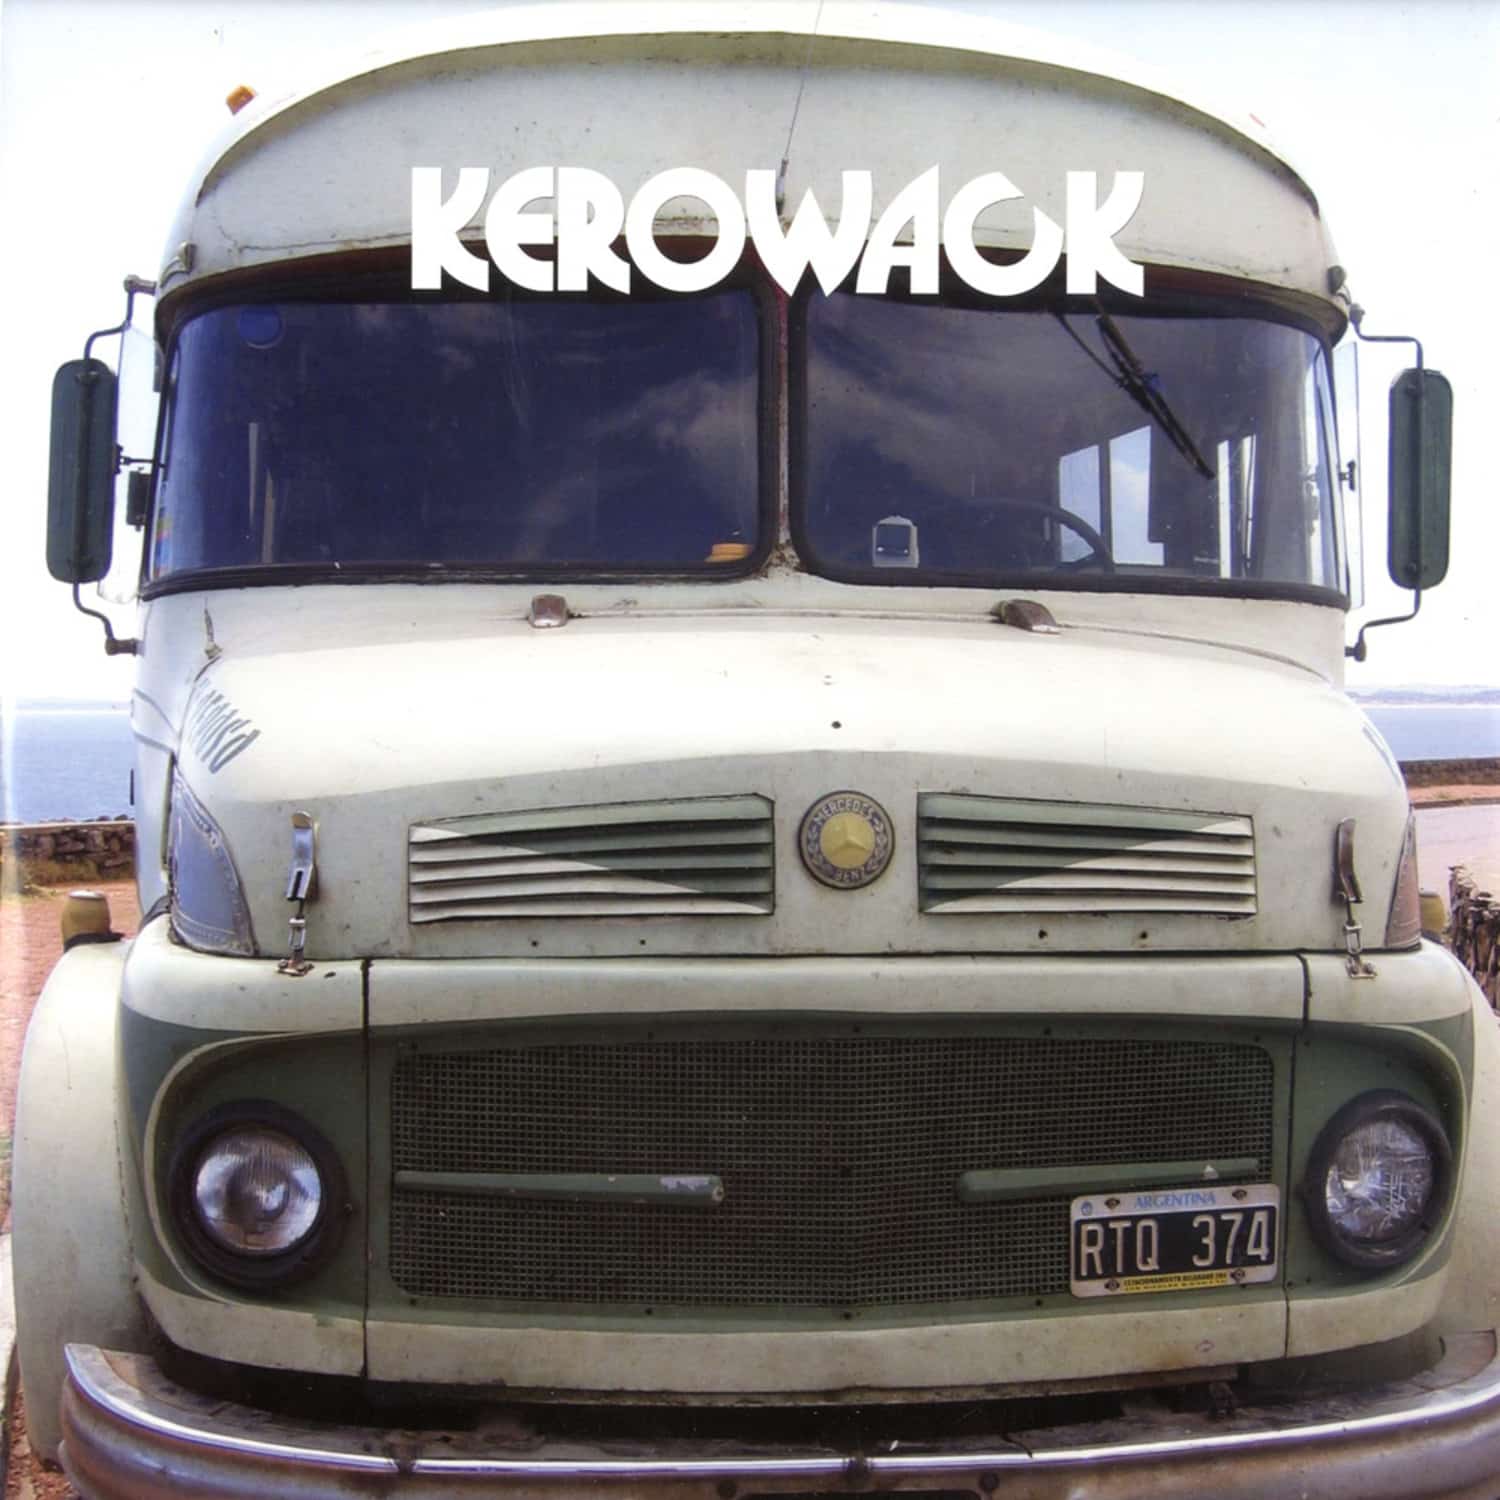 Kerowack - THE FIRST EP